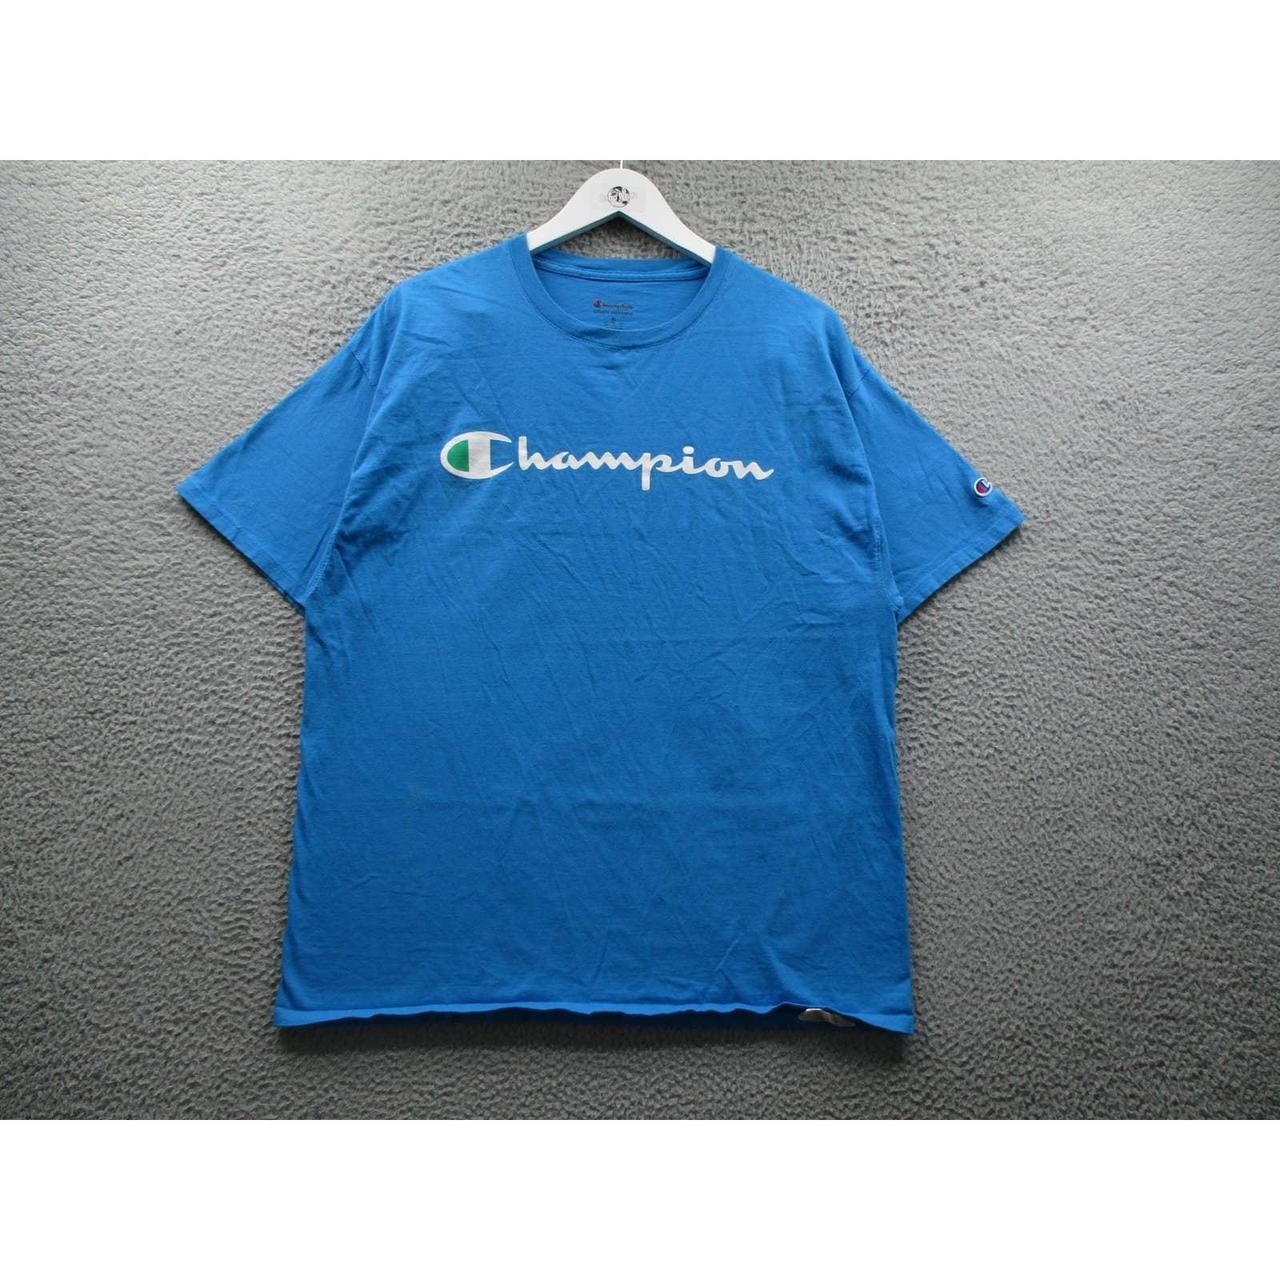 Champion Men's T-Shirt - Blue - XL